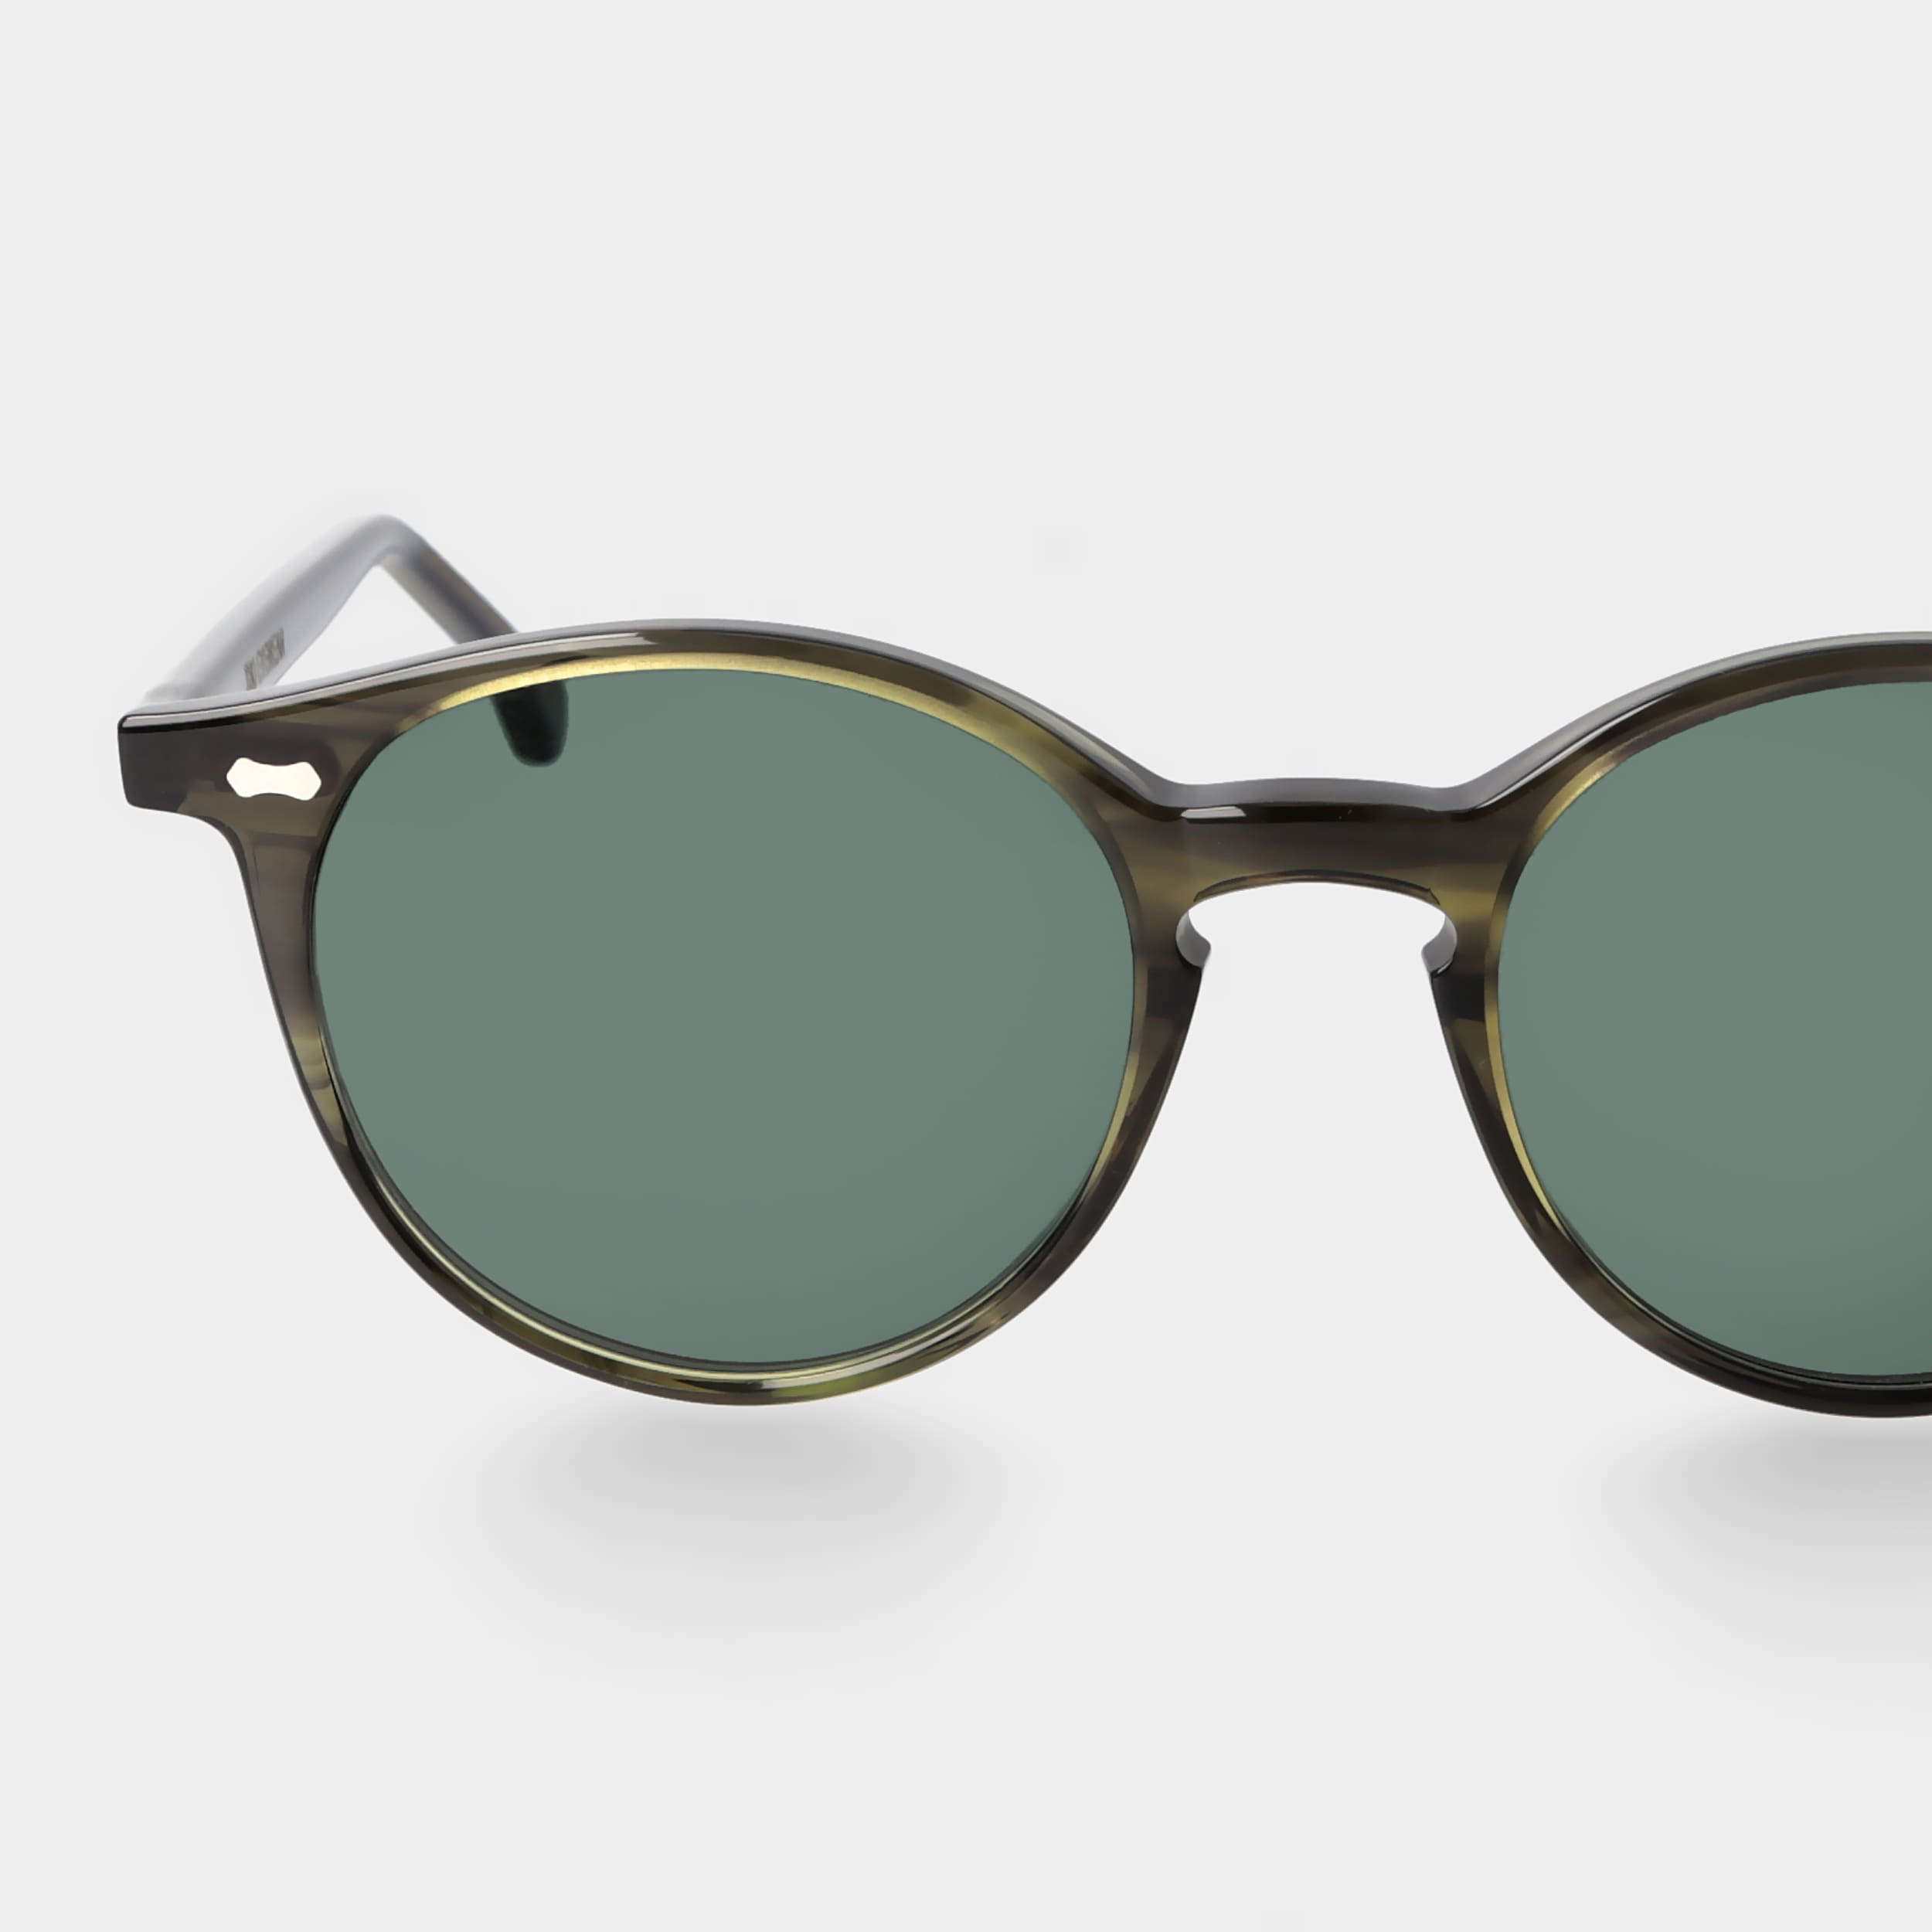 sunglasses-cran-eco-green-bottle-green-sustainable-tbd-eyewear-lens